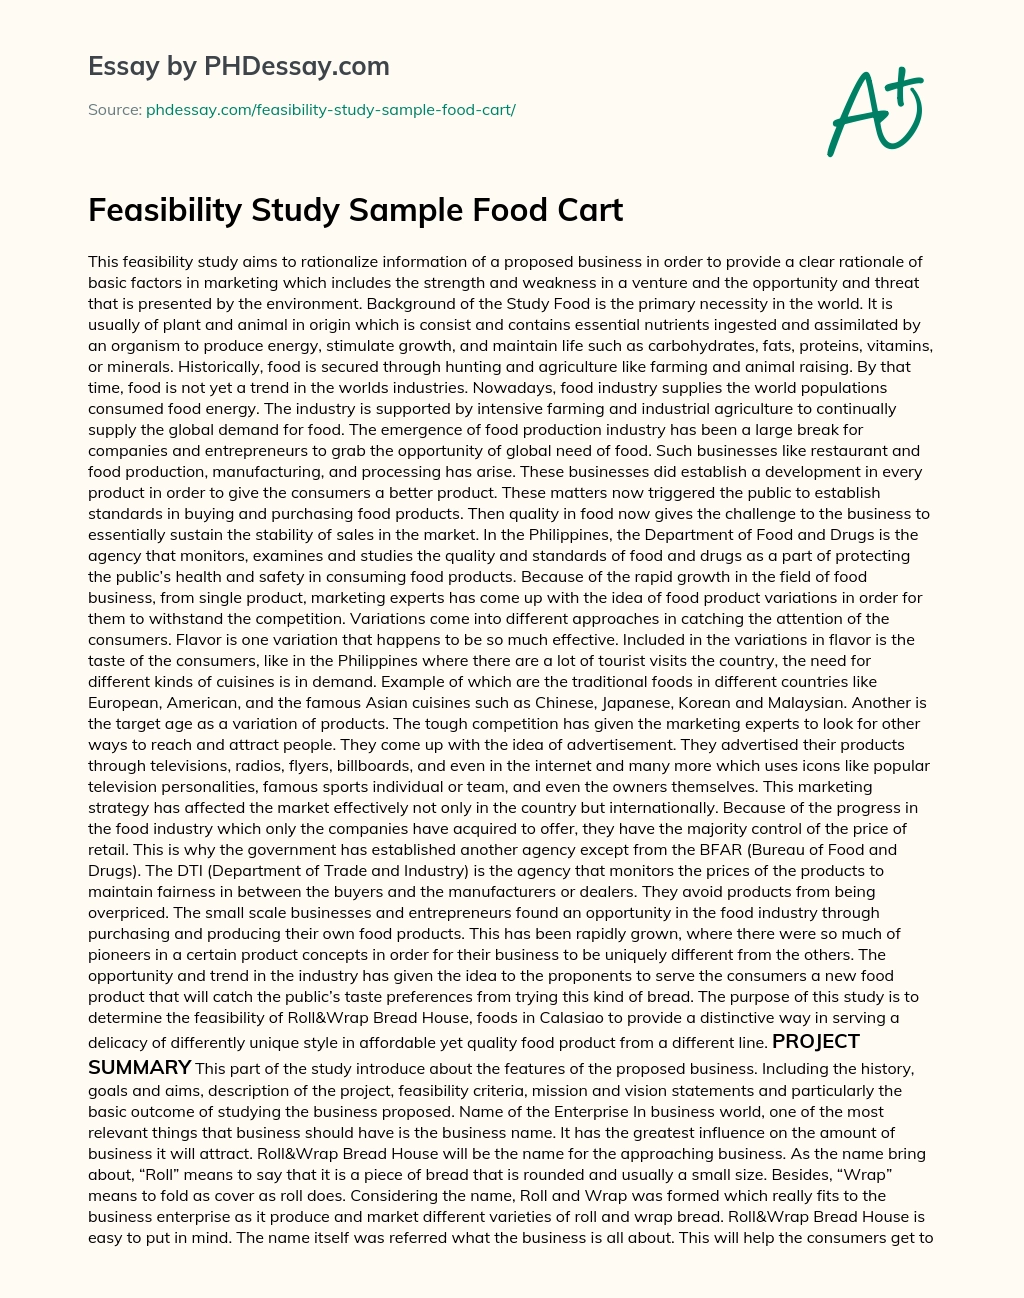 Feasibility Study Sample Food Cart essay